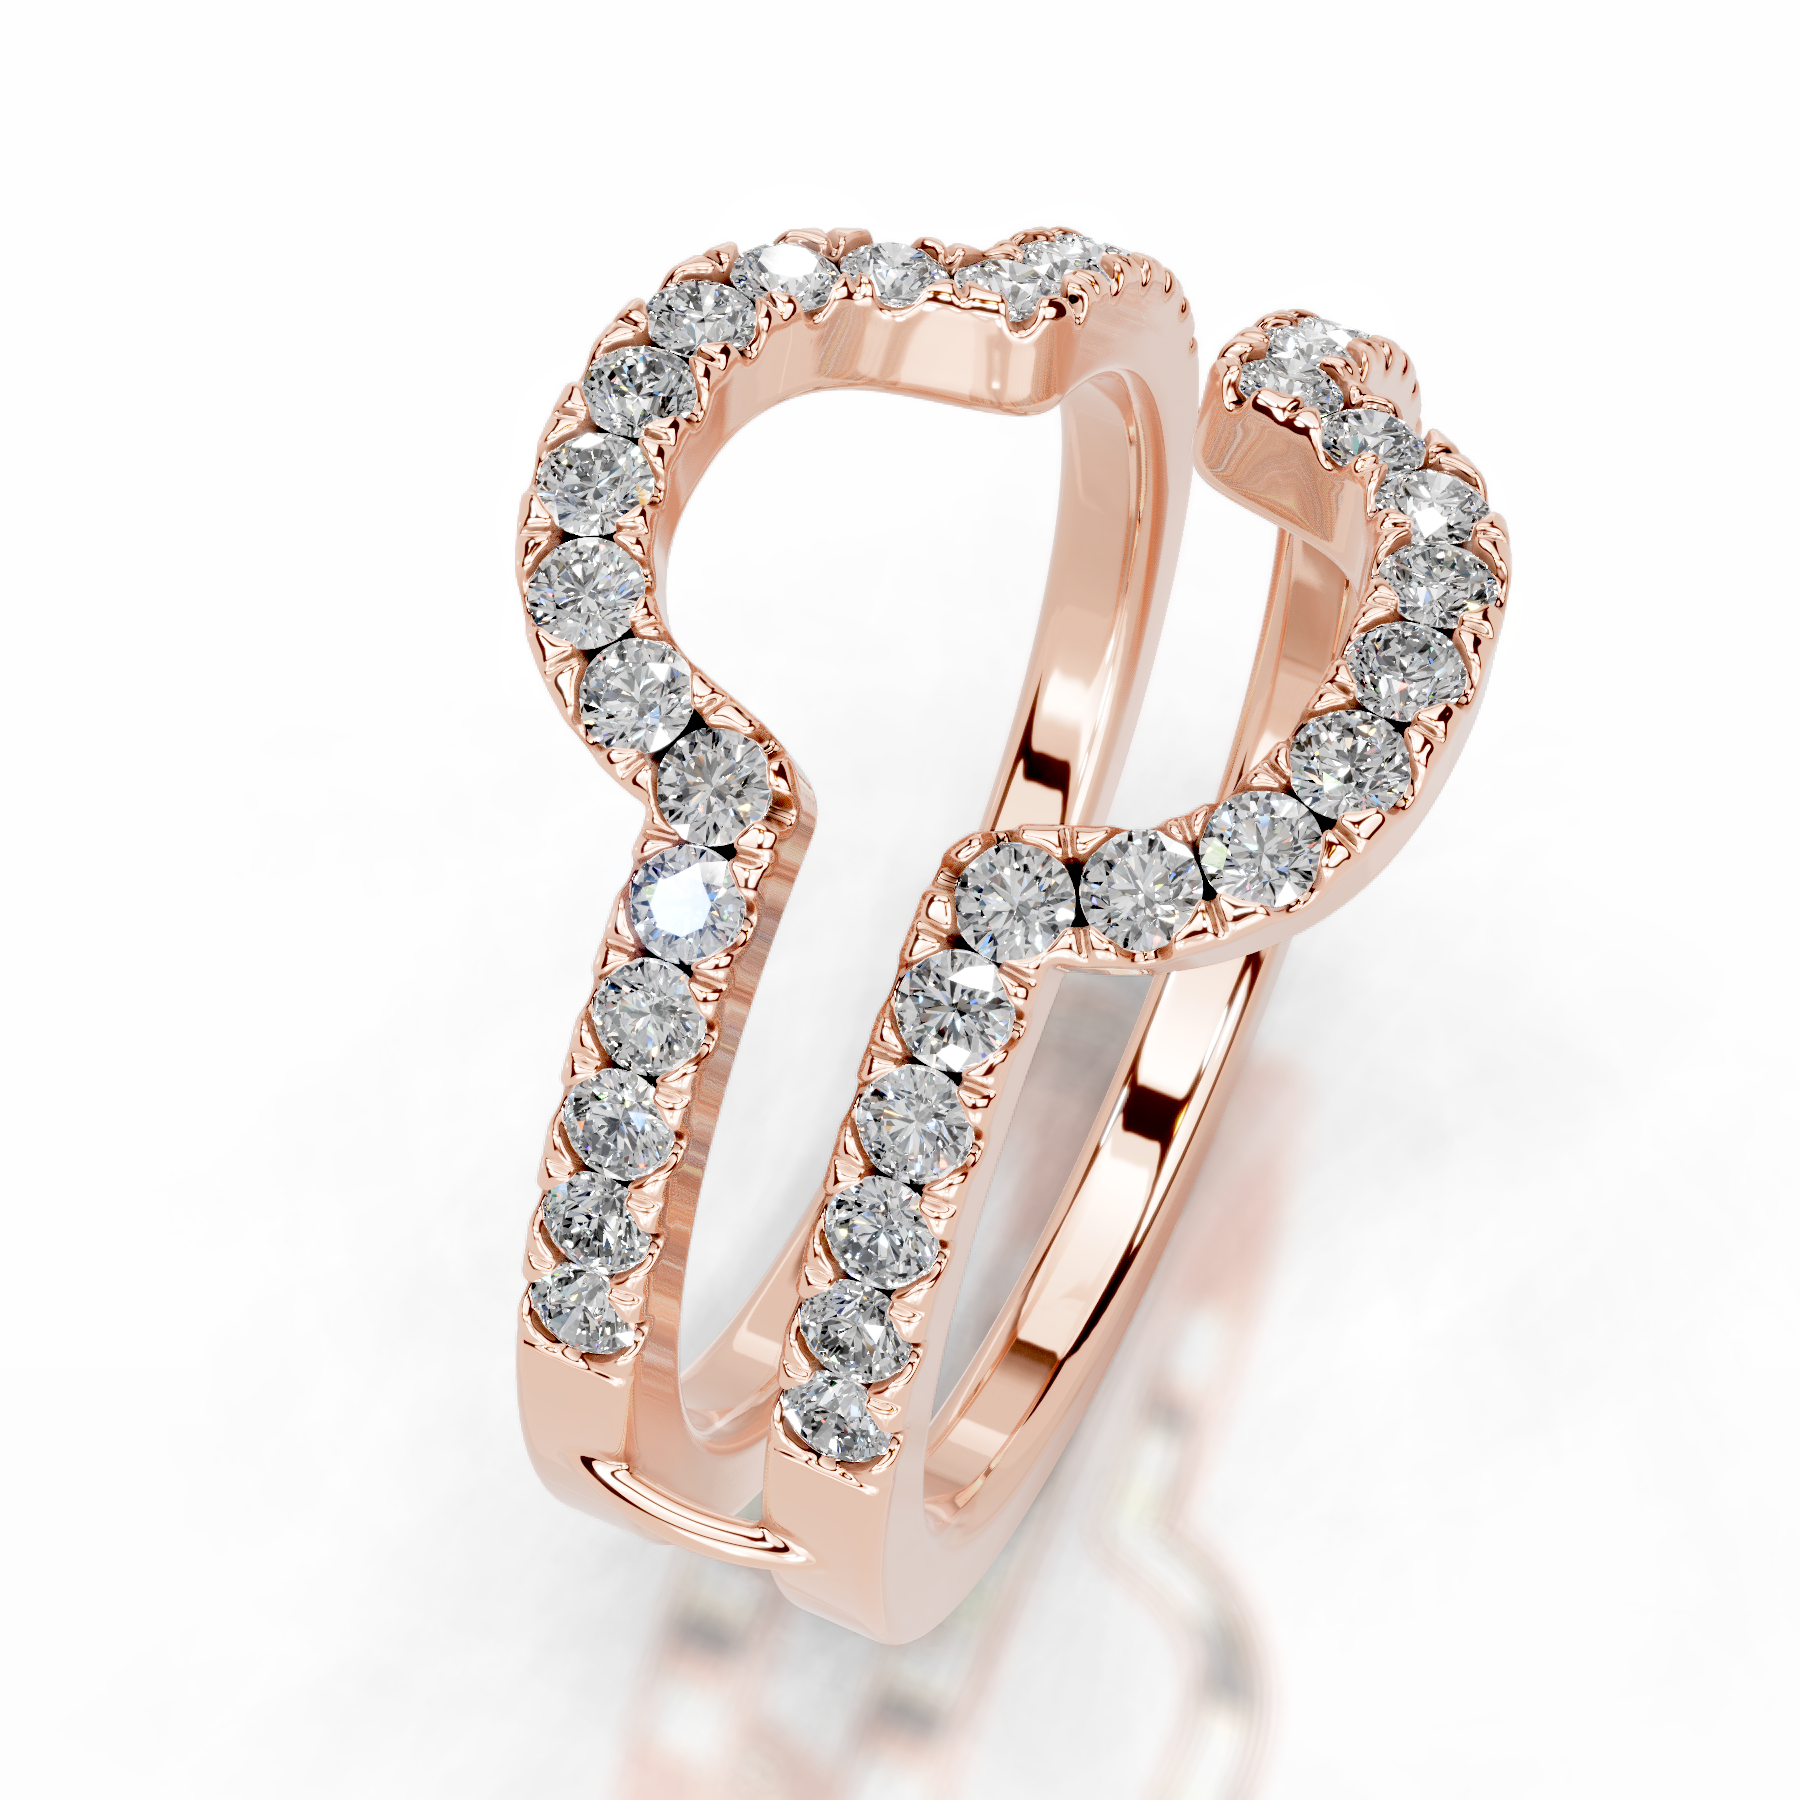 Yana Diamond Wedding Ring   (0.50 Carat) -14K Rose Gold